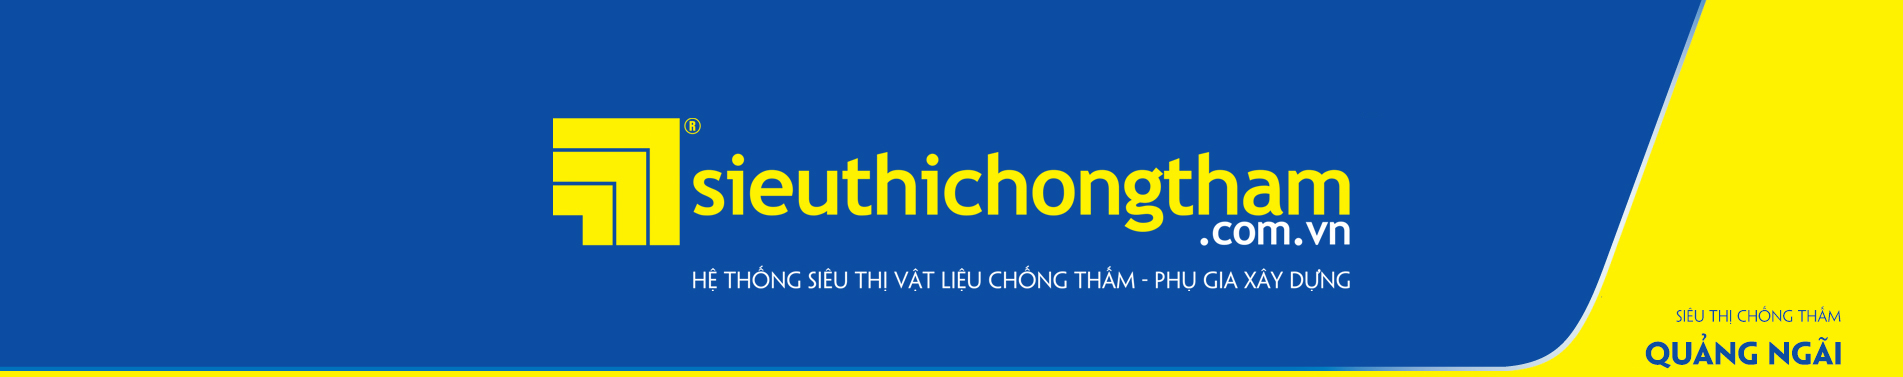 Sieu Thi Chong Tham Quang Ngai 1